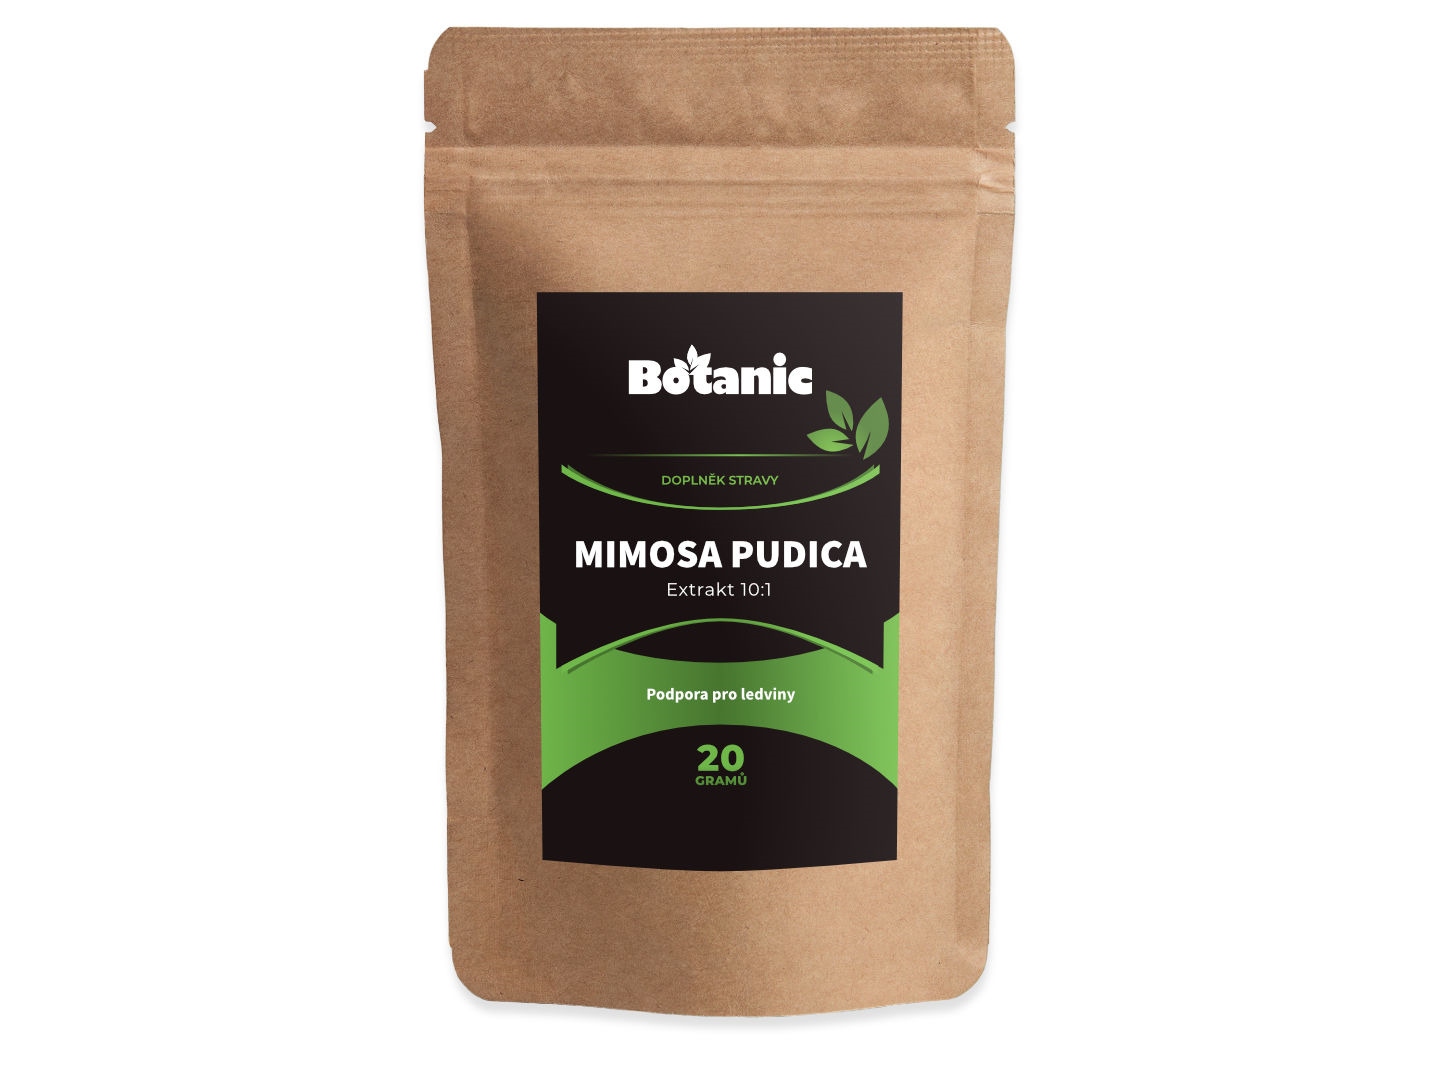 Botanic Mimosa pudica - Extrakt 10:1 v prášku 20g